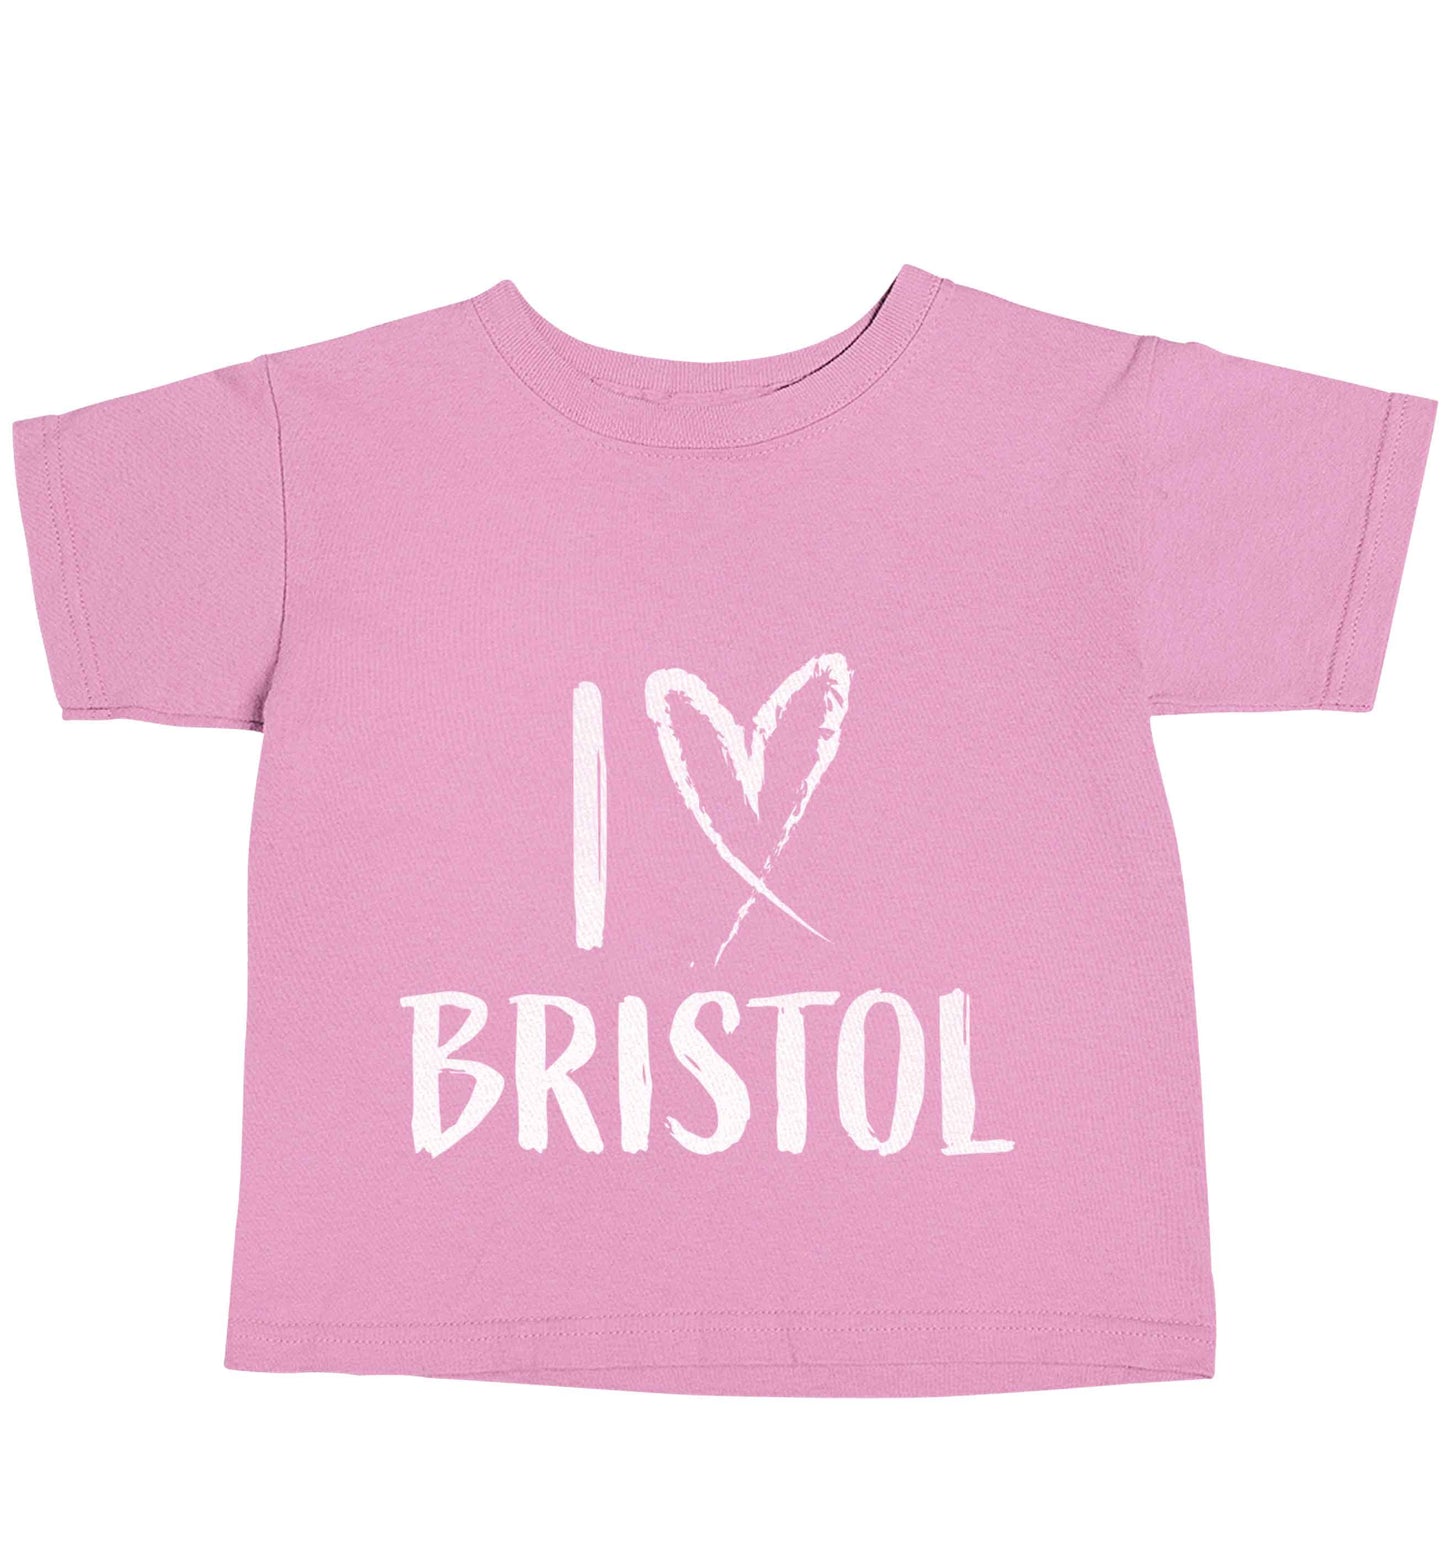 I love Bristol light pink baby toddler Tshirt 2 Years